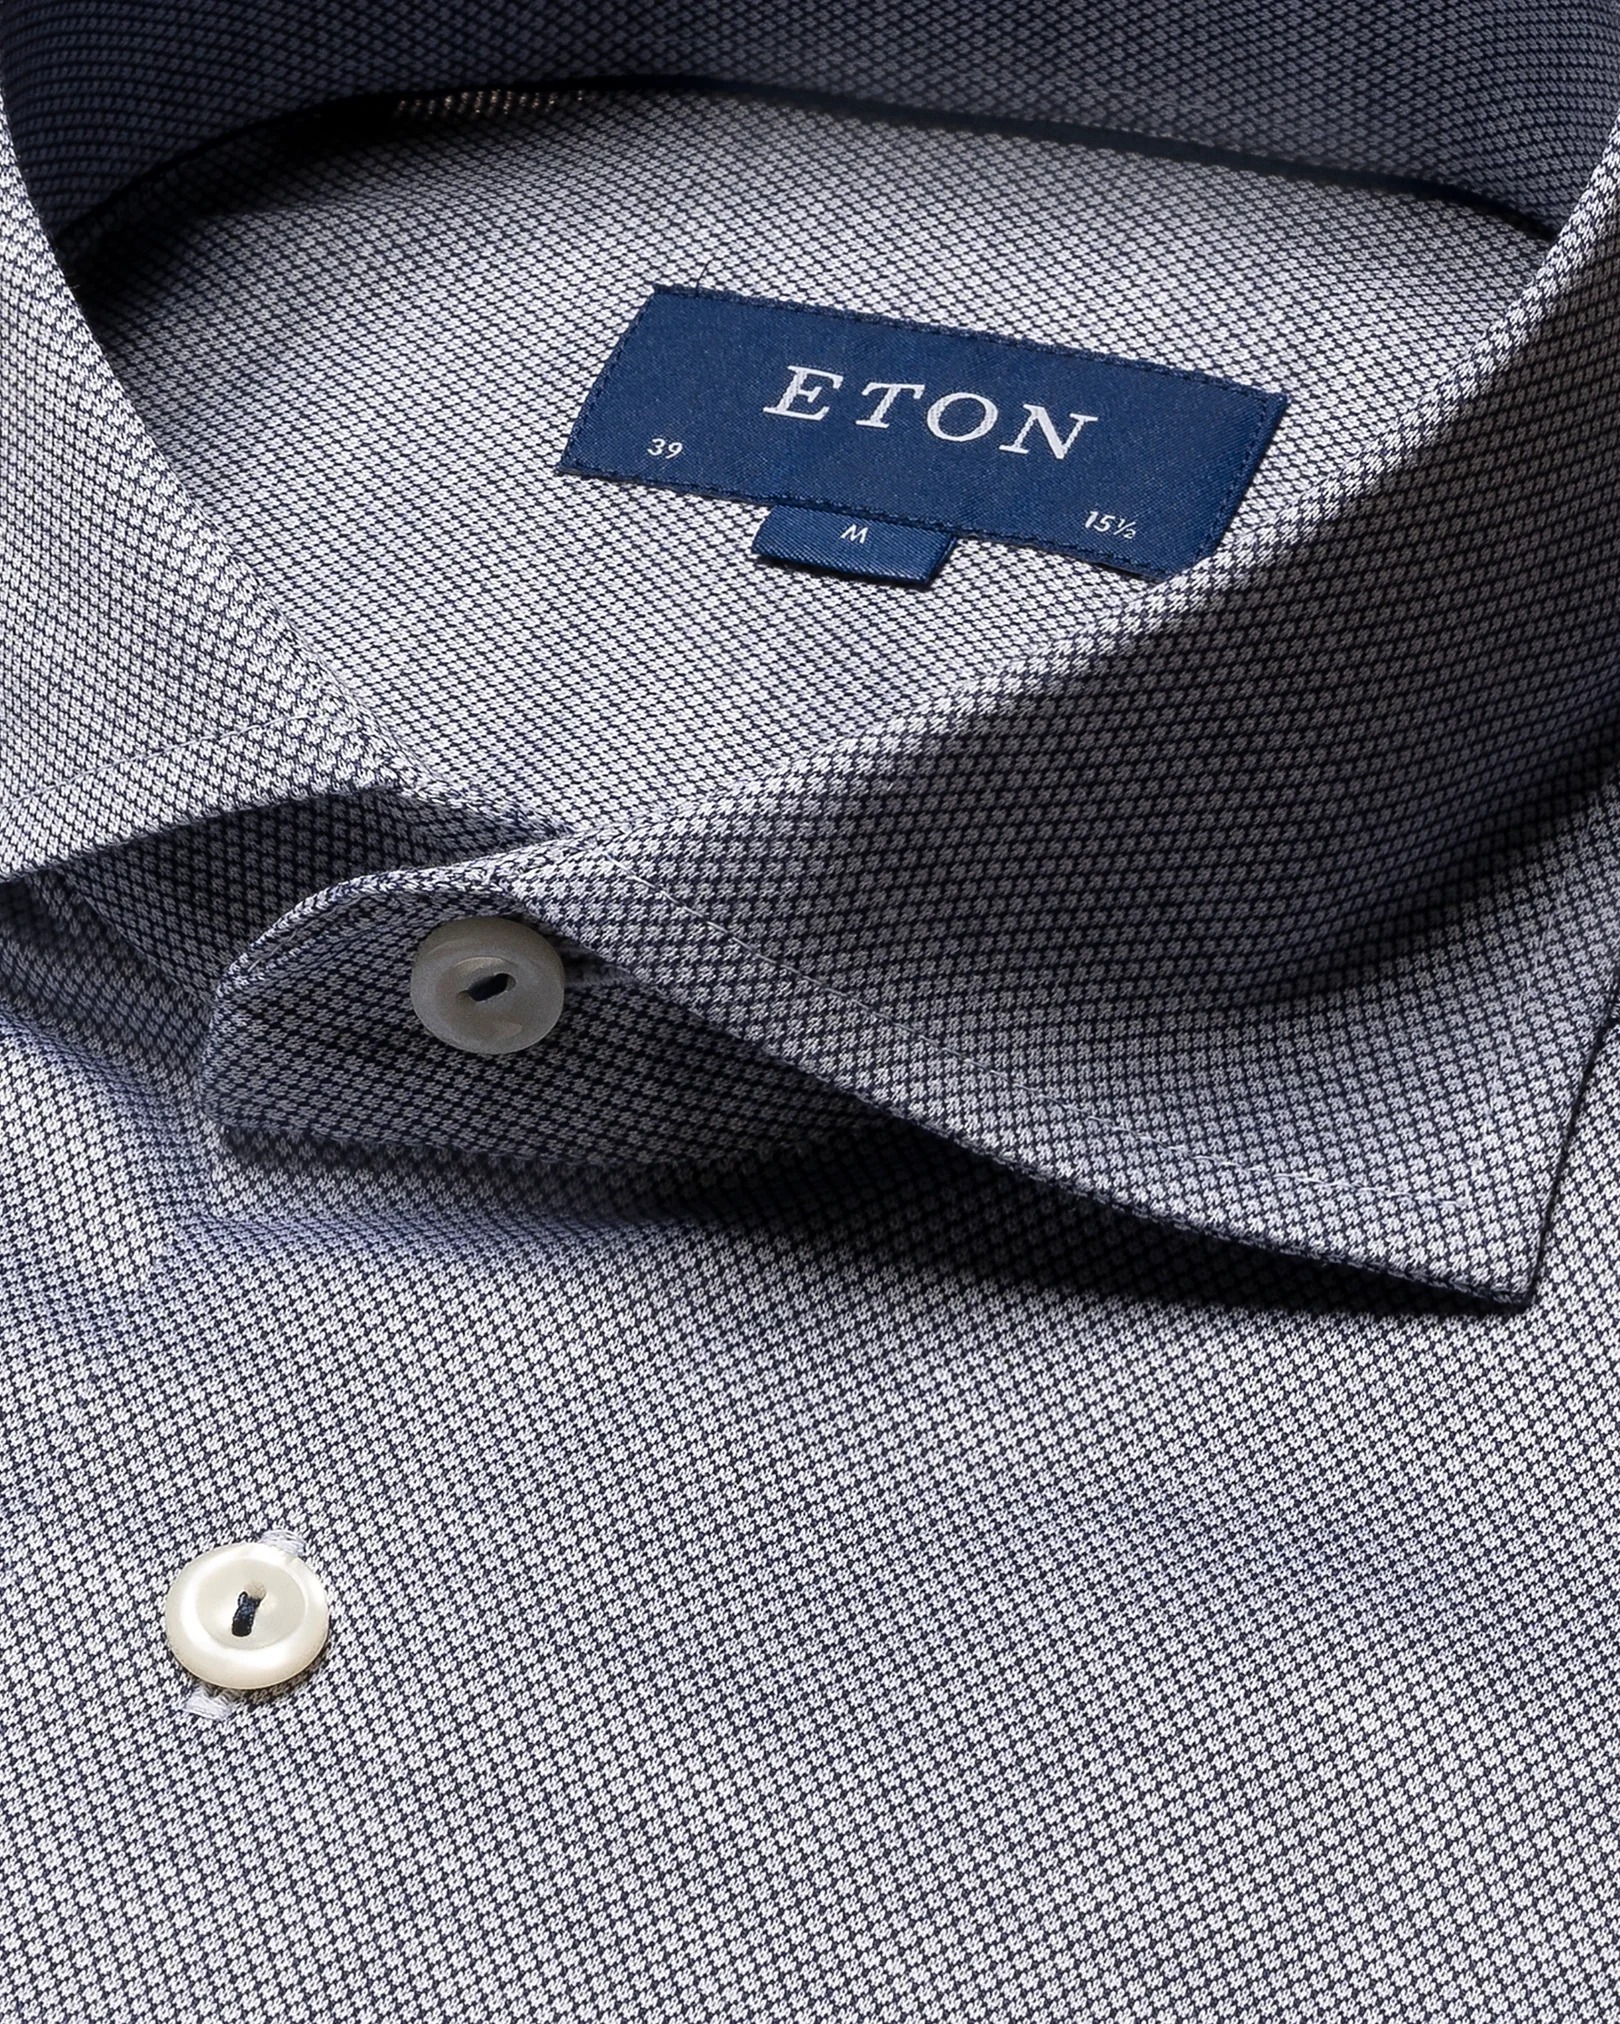 Eton - navy blue king knit